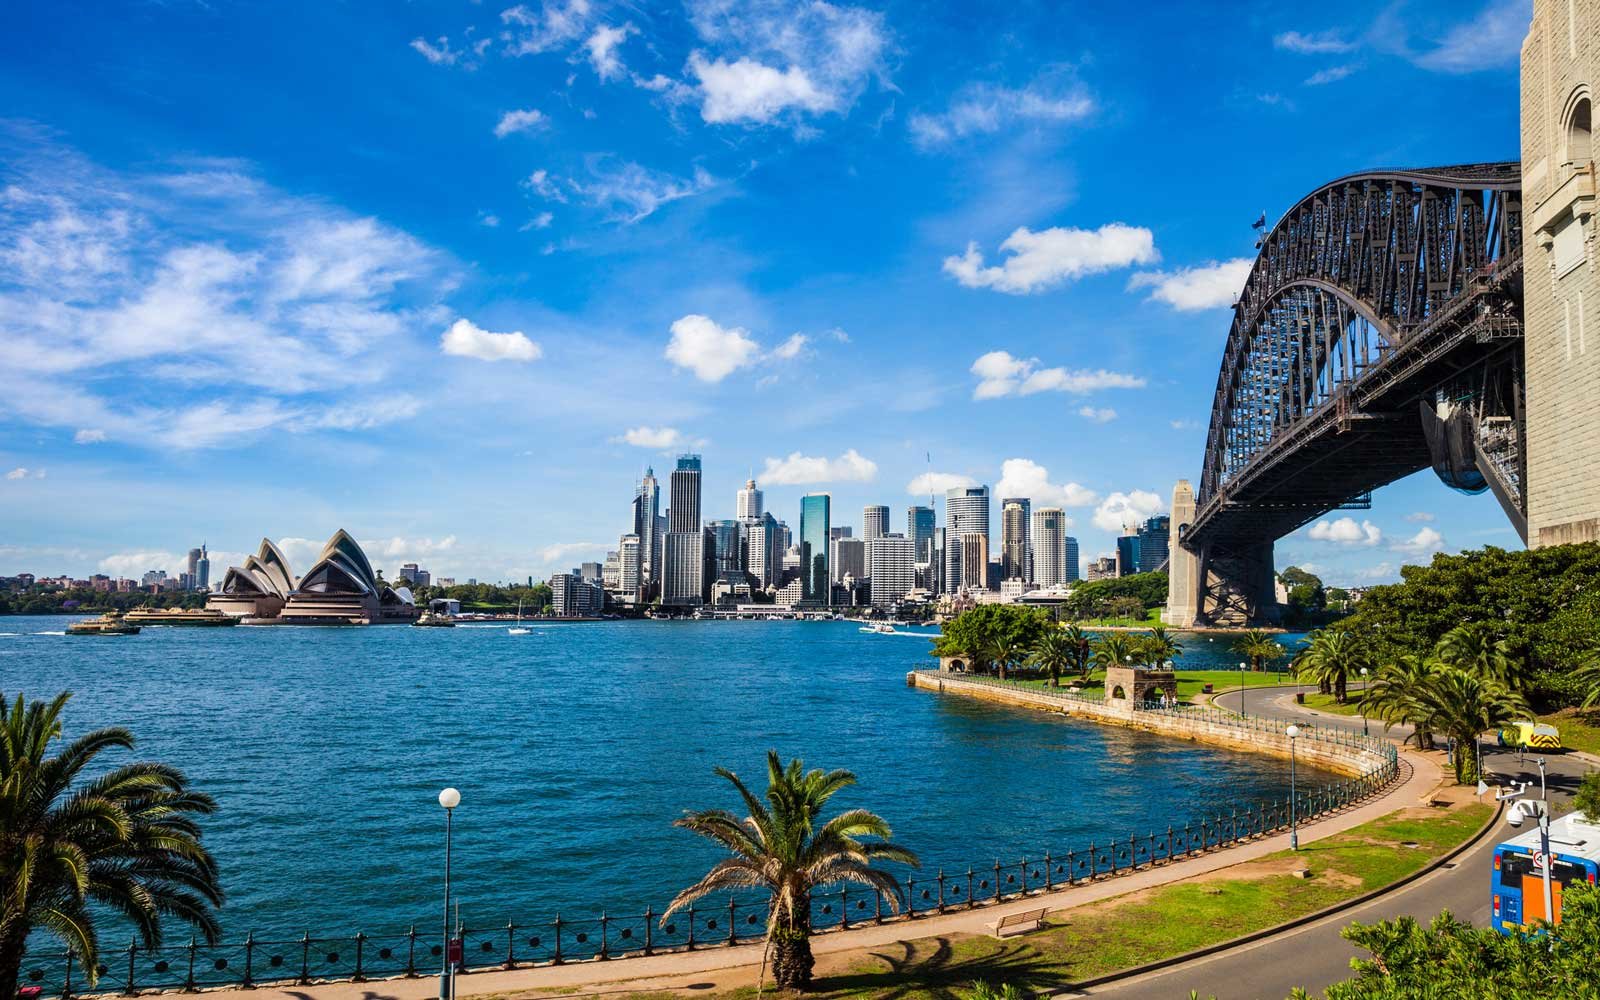 Cityscape of Sydney Downtown and Harbor Bridge